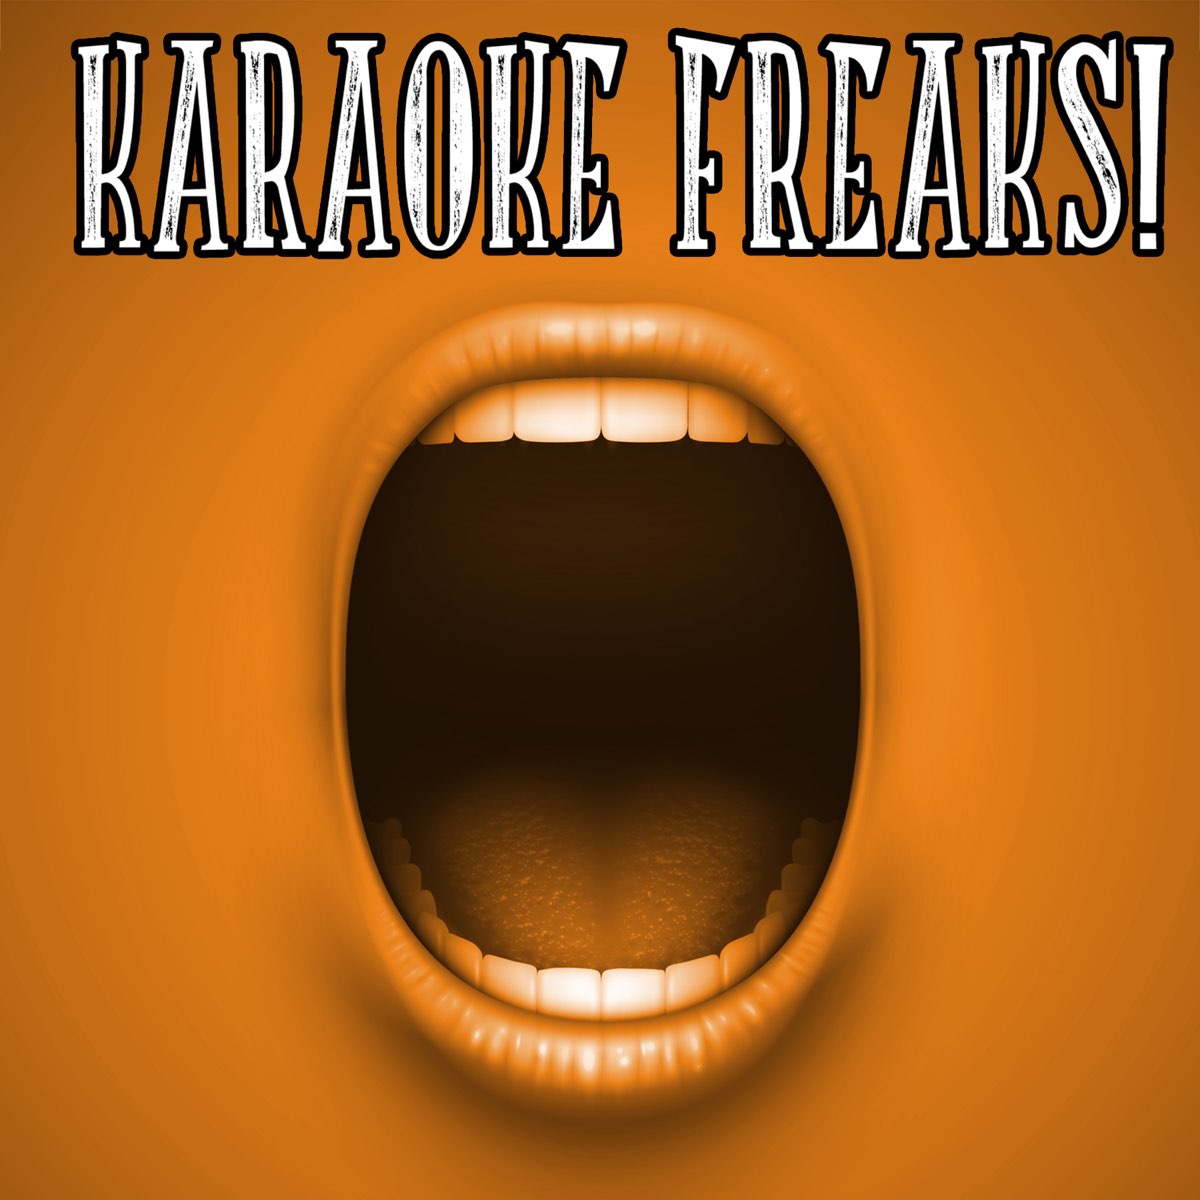 Lush Life (Originally Performed by Zara Larsson) [Karaoke Instrumental] -  Single by Karaoke Freaks on Apple Music